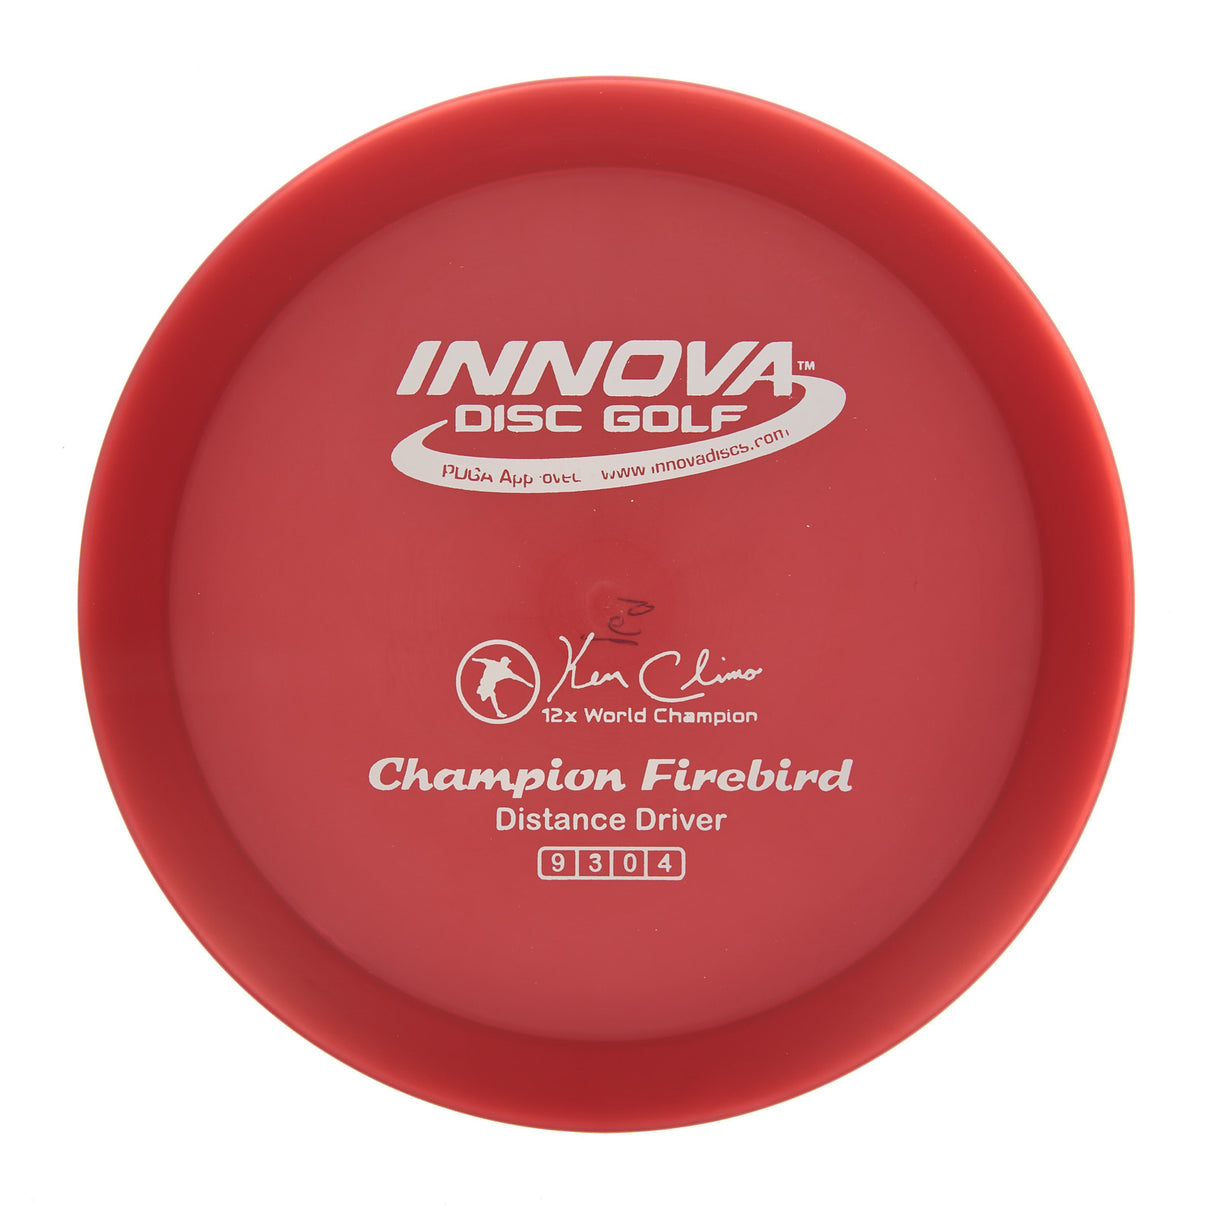 Innova Firebird - Ken Climo Champion 169g | Style 0001